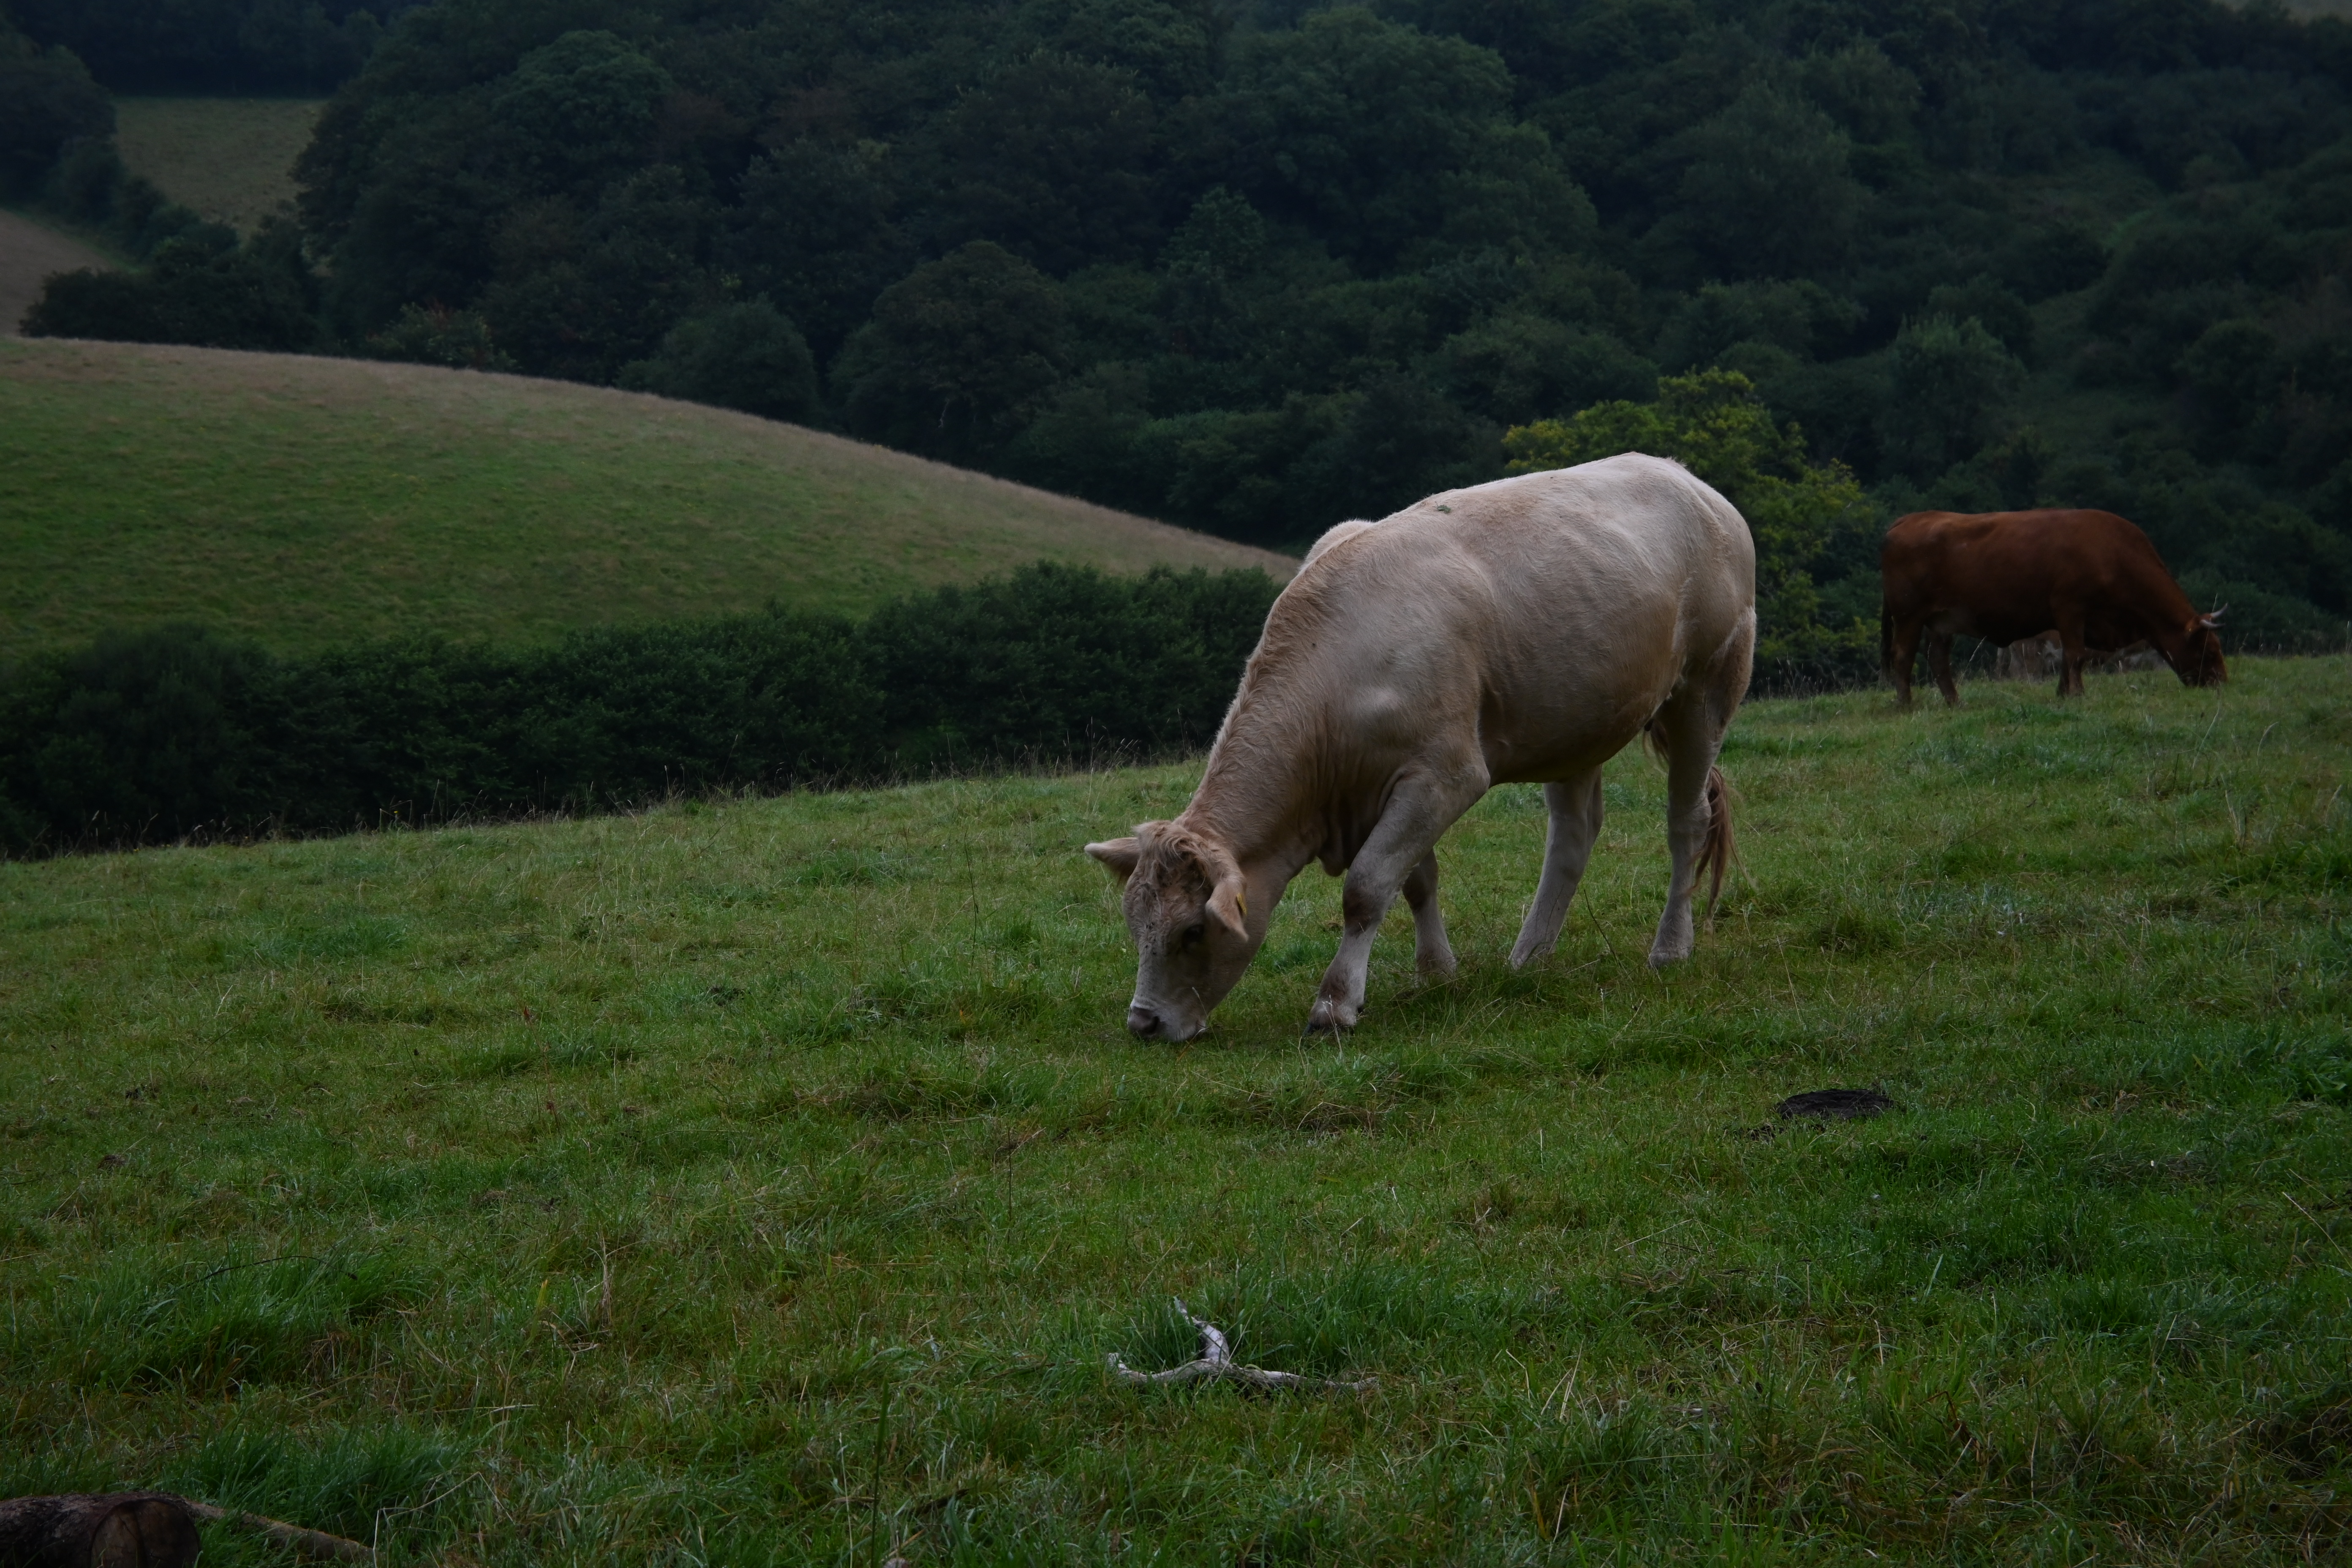 A cow grazing in a field